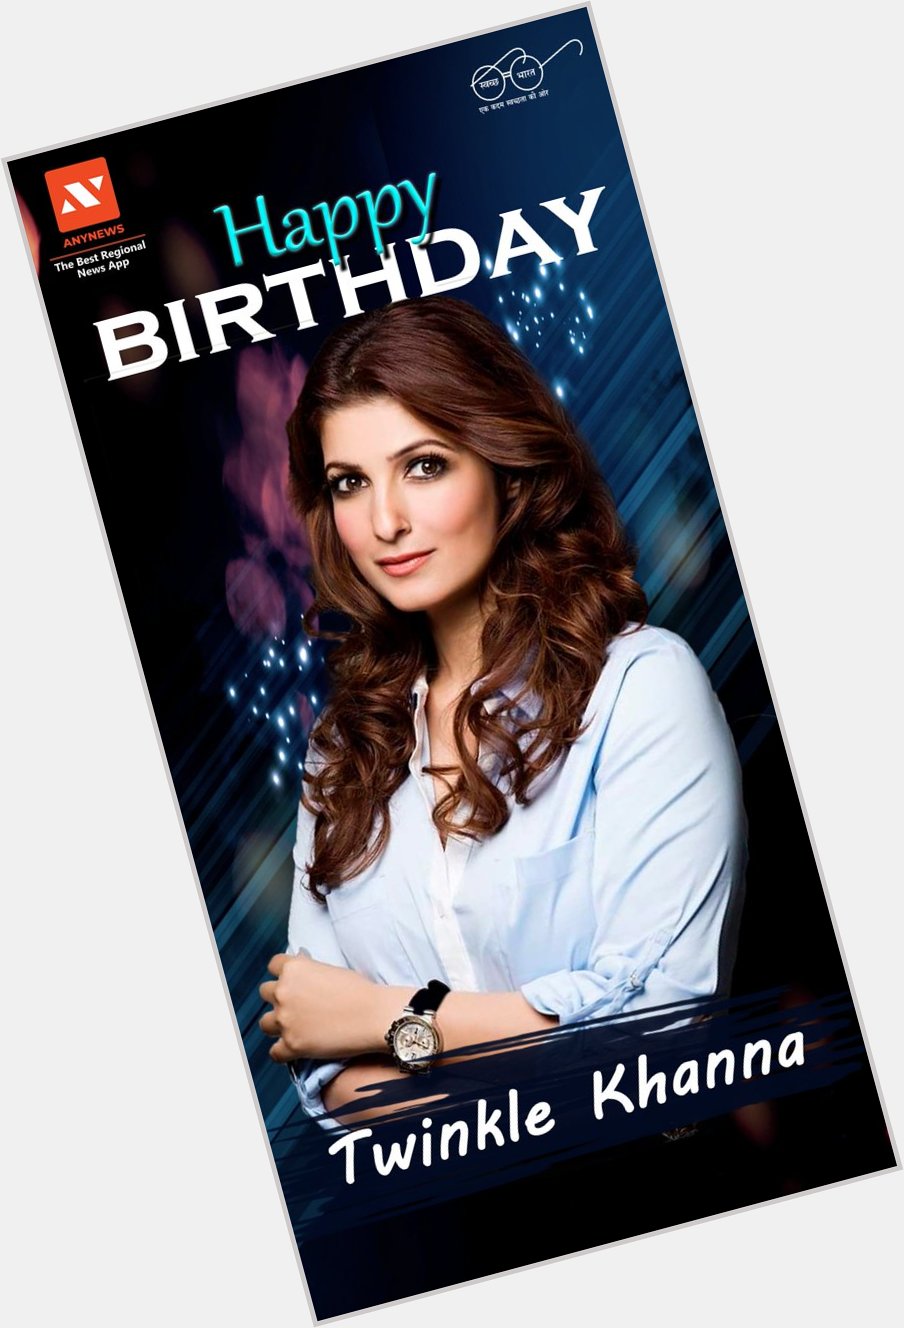 AnyNews wishes (Twinkle Khanna) Happy Birthday.   